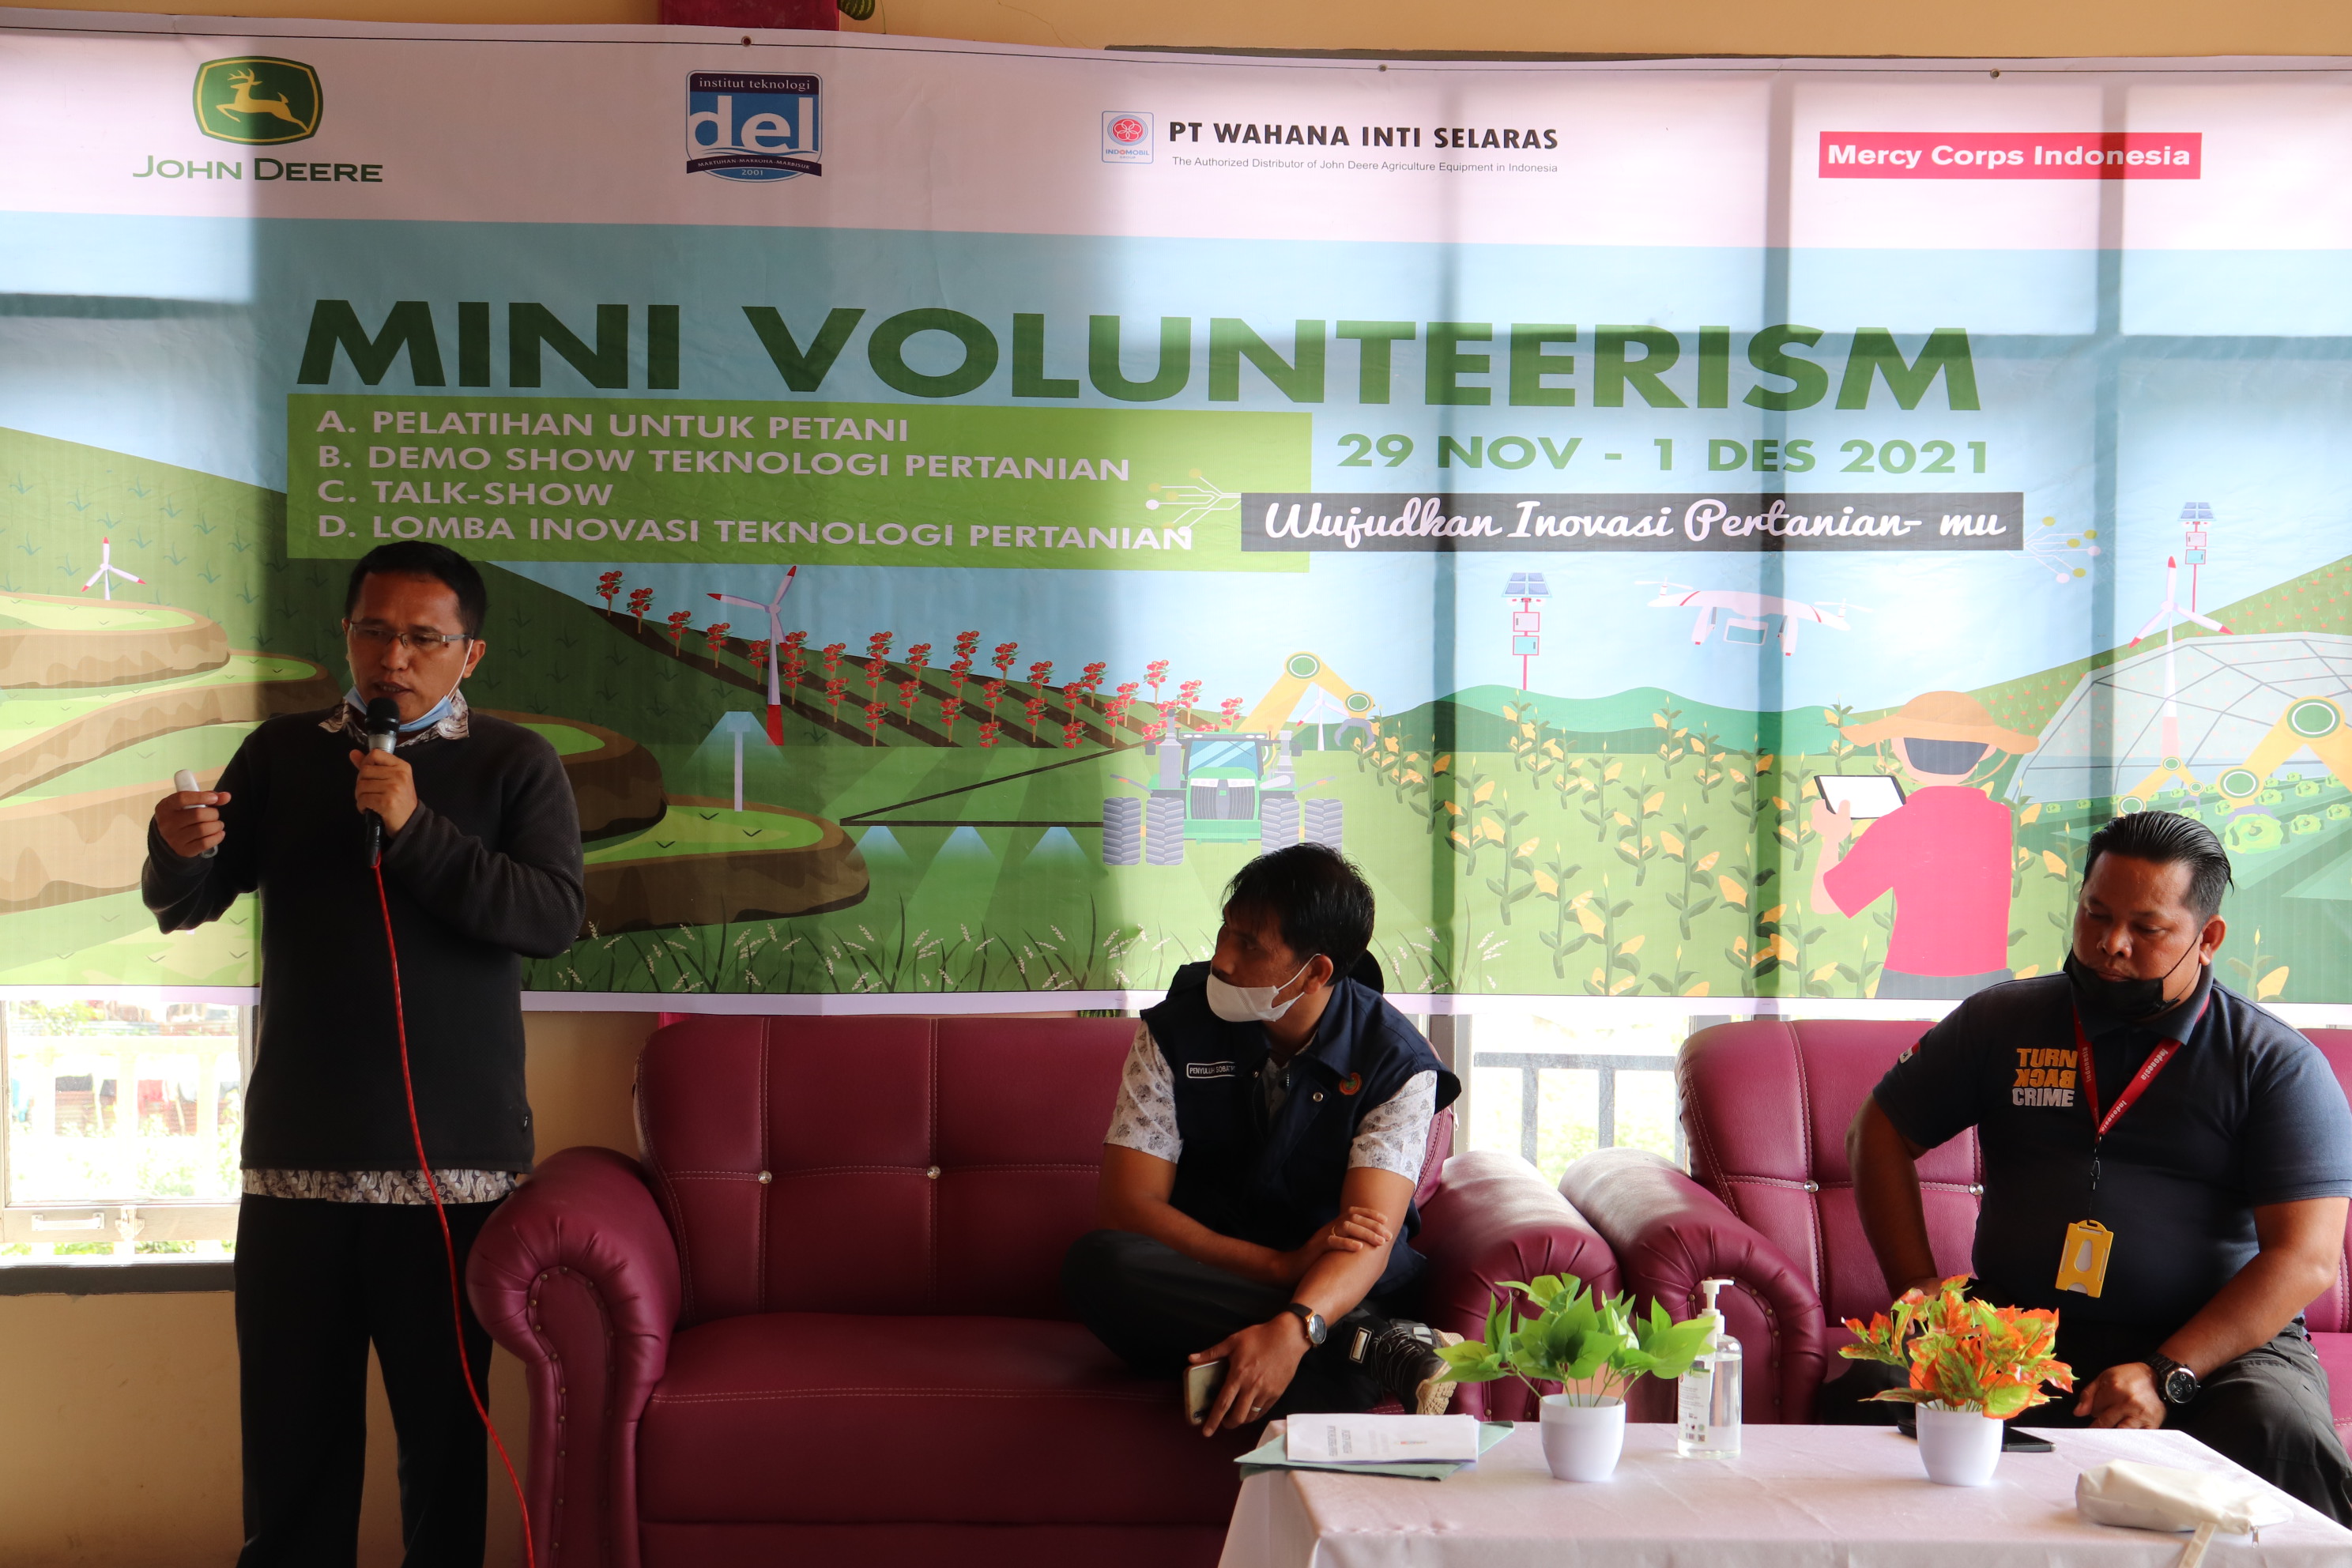 Mini Volunteerism Inovasi Teknologi Pertanian 2021